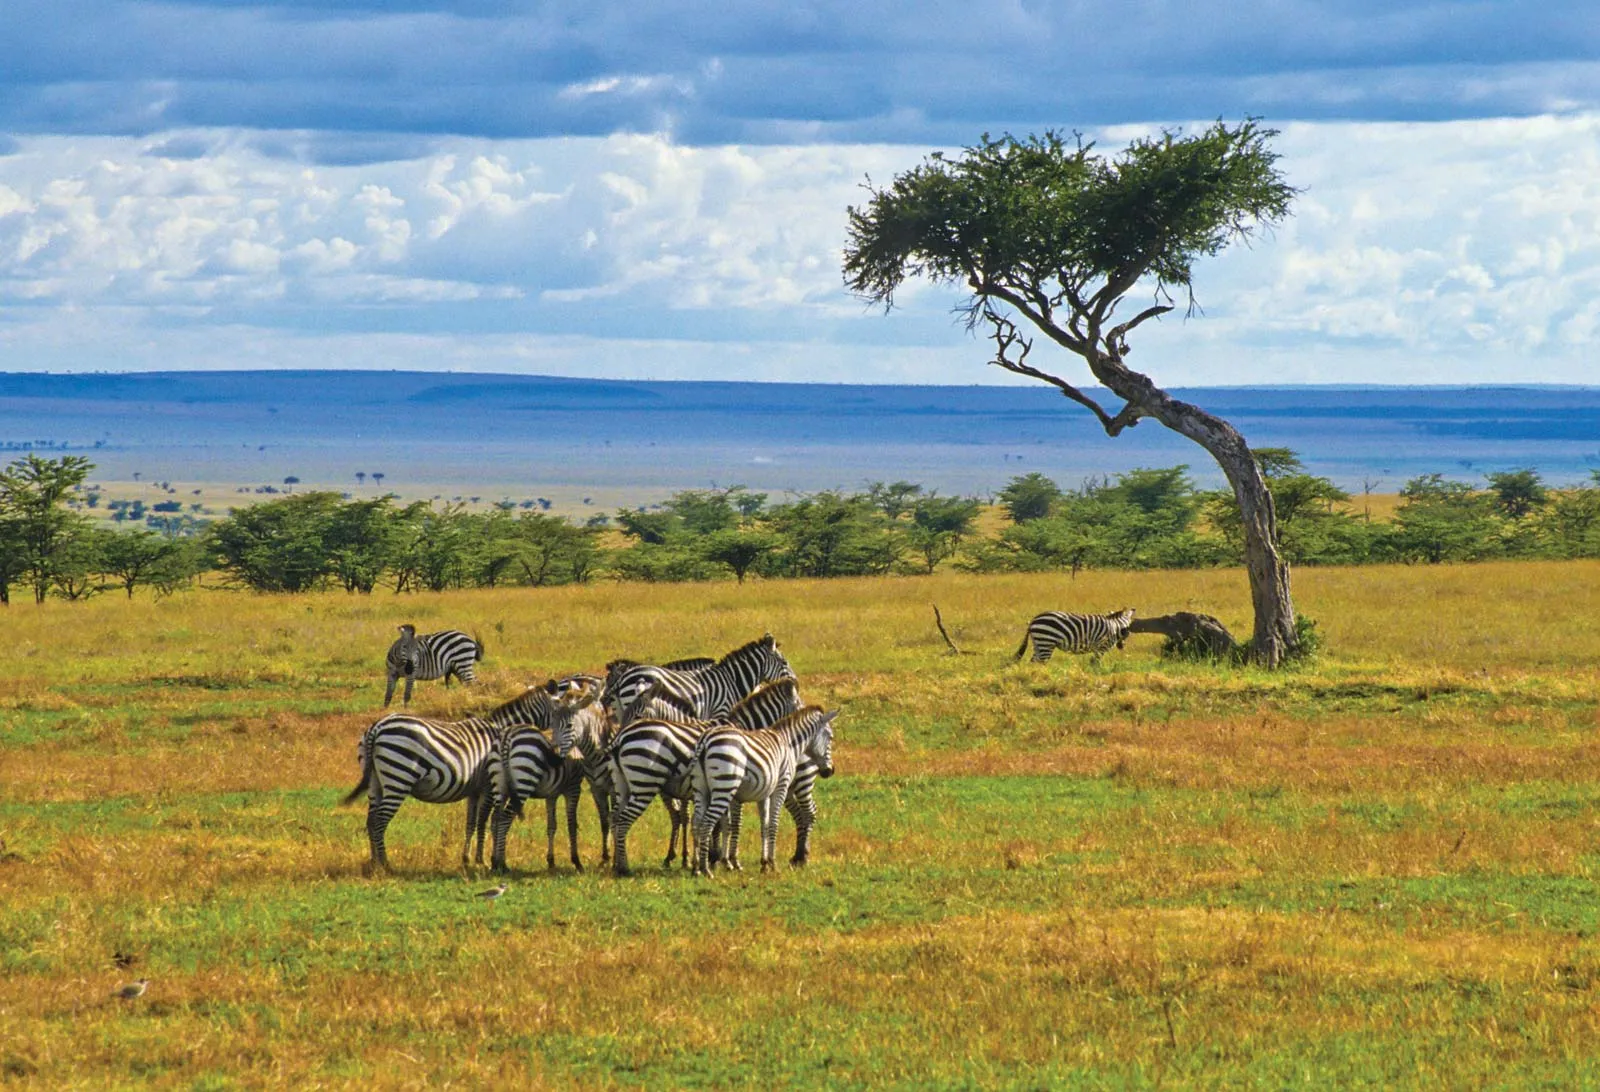 Kenya for a perfect holiday